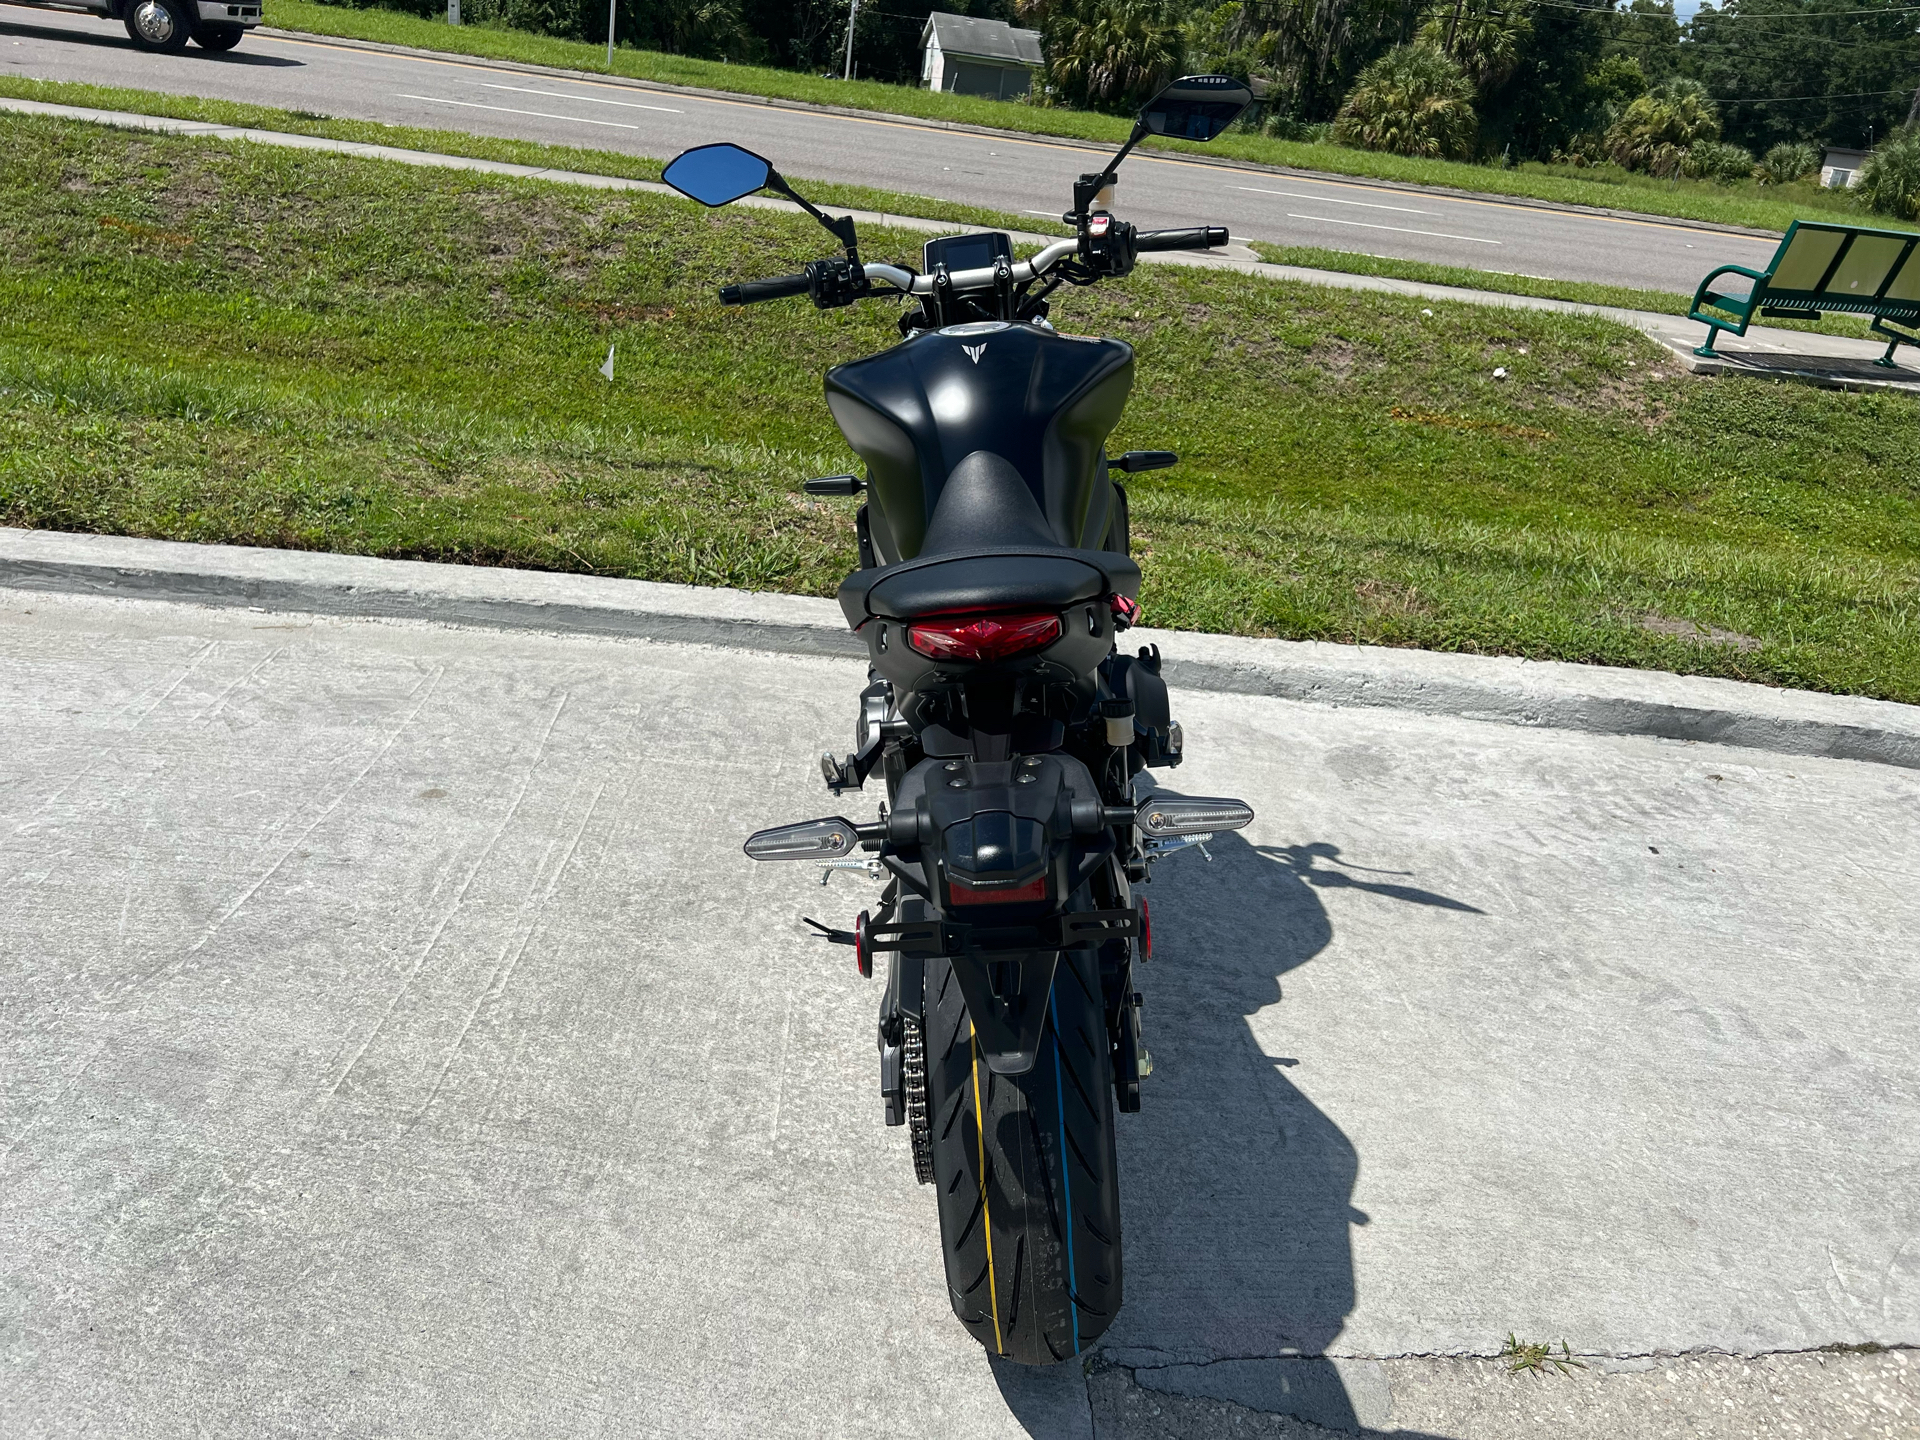 2022 Yamaha MT-09 in Orlando, Florida - Photo 6